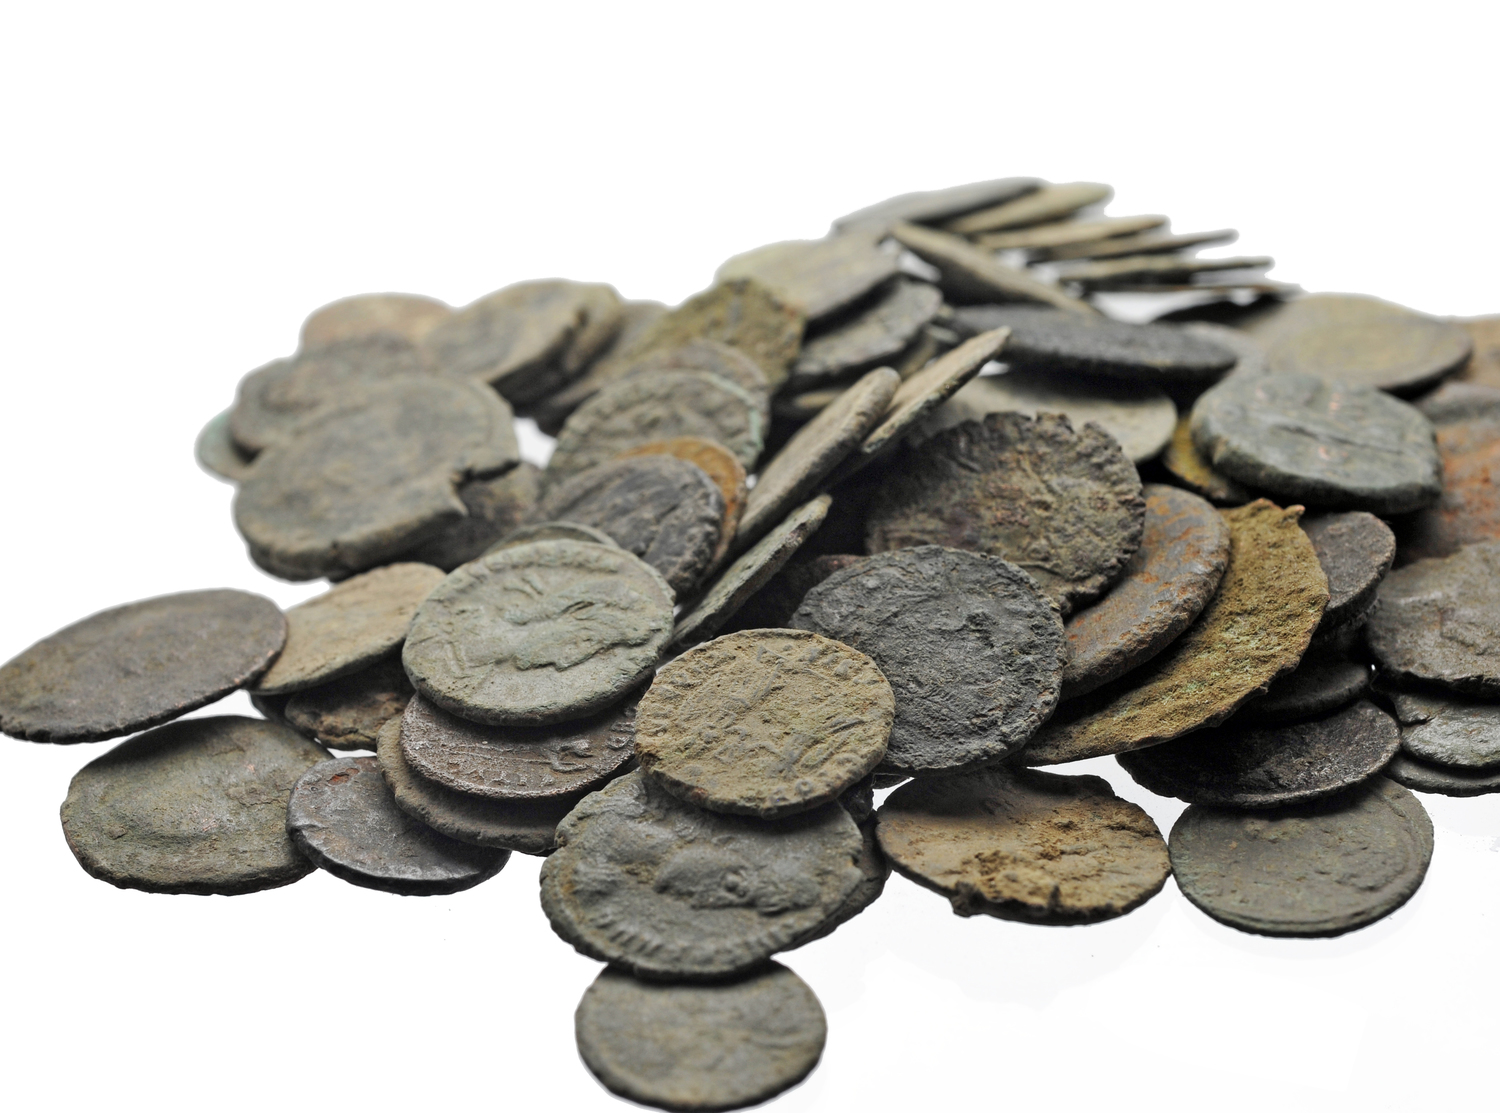 Old Coin. Dirty Coin. Broken on Roman Coins. Don't Coin.